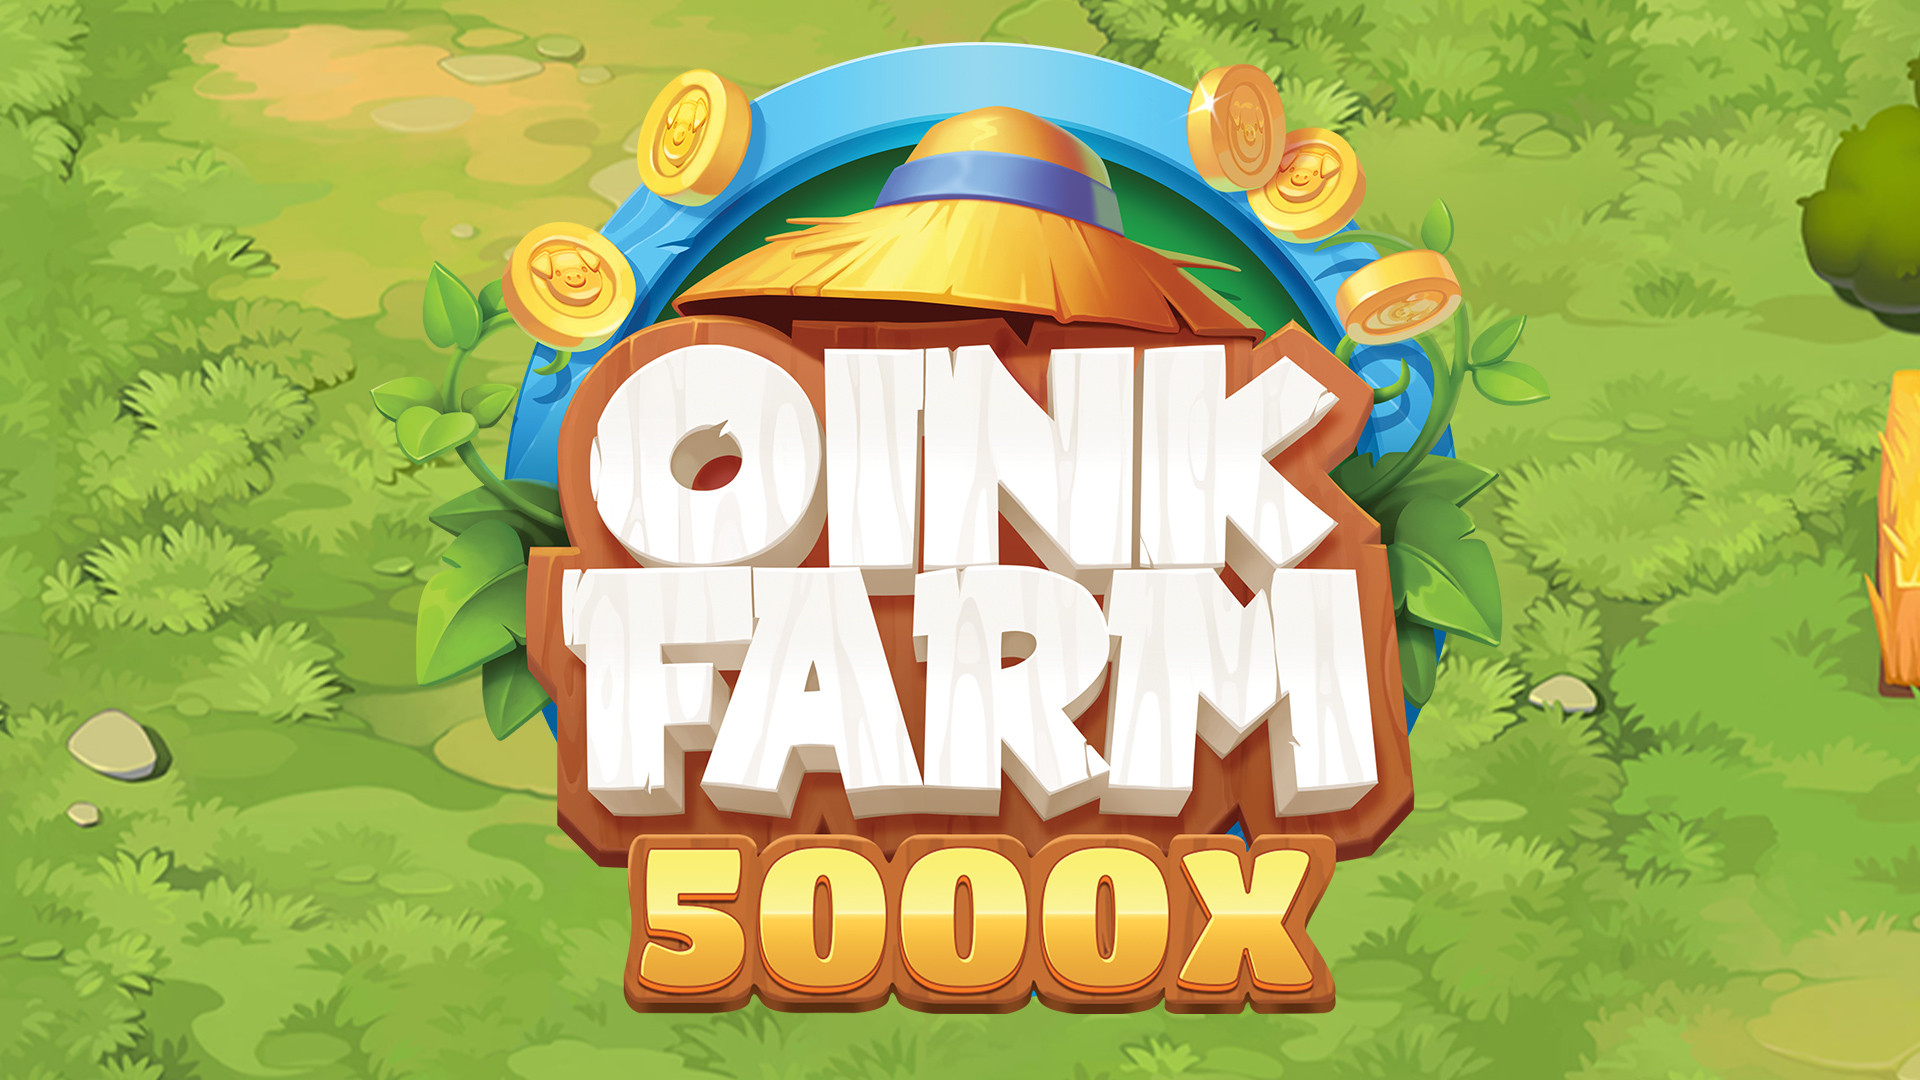 Oink Farm